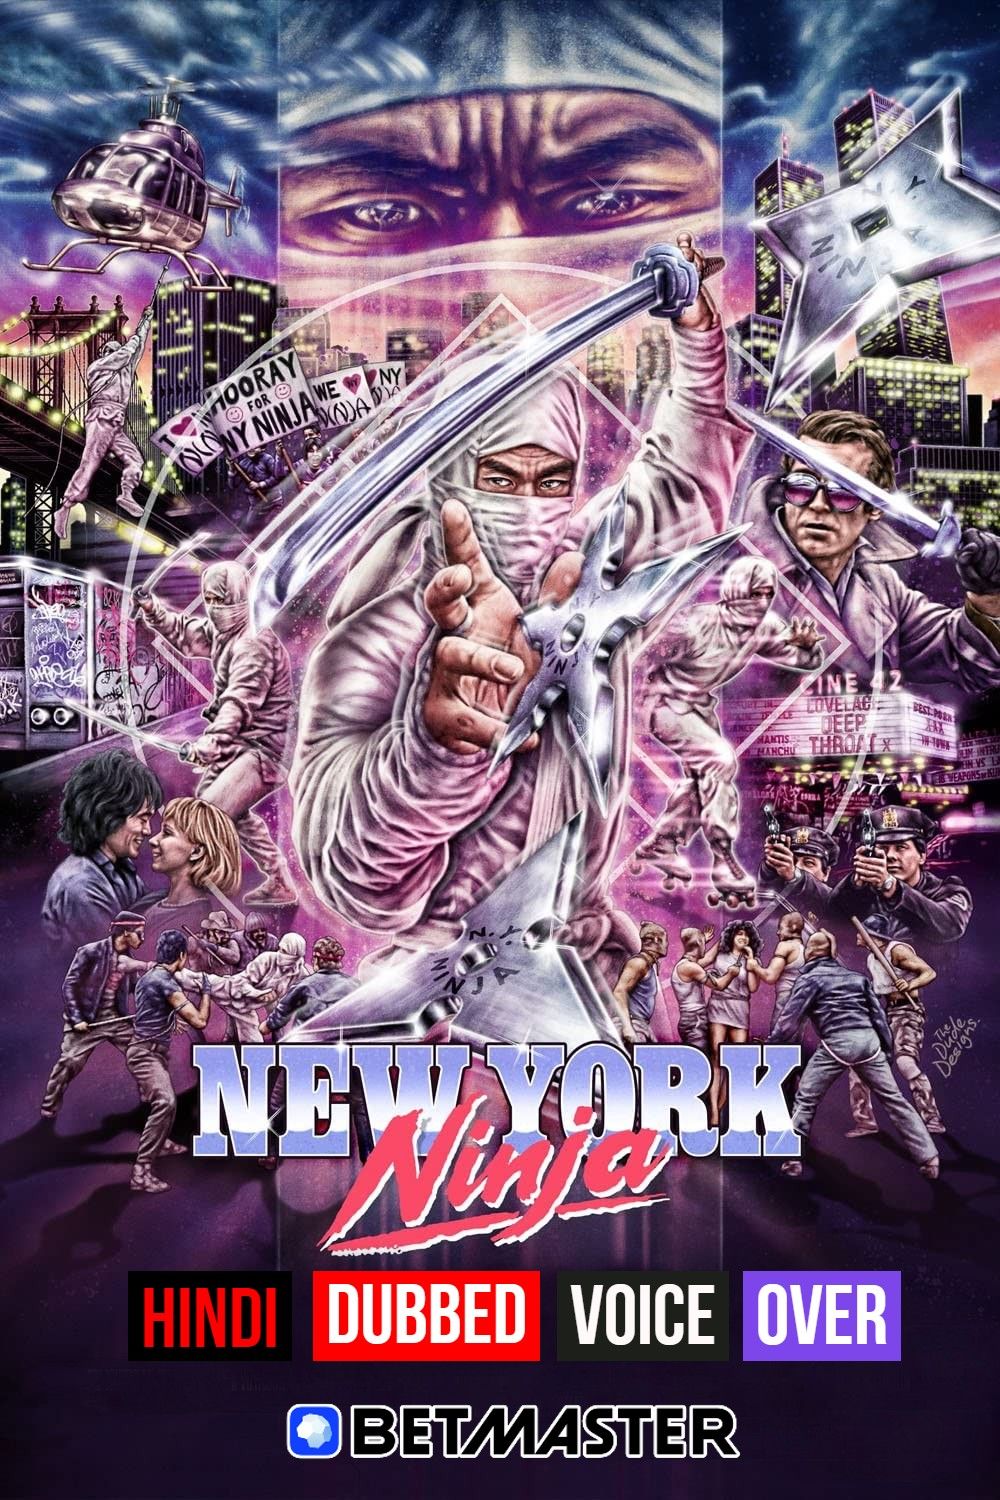 New York Ninja (2021) Hindi (Voice Over) Dubbed BluRay download full movie